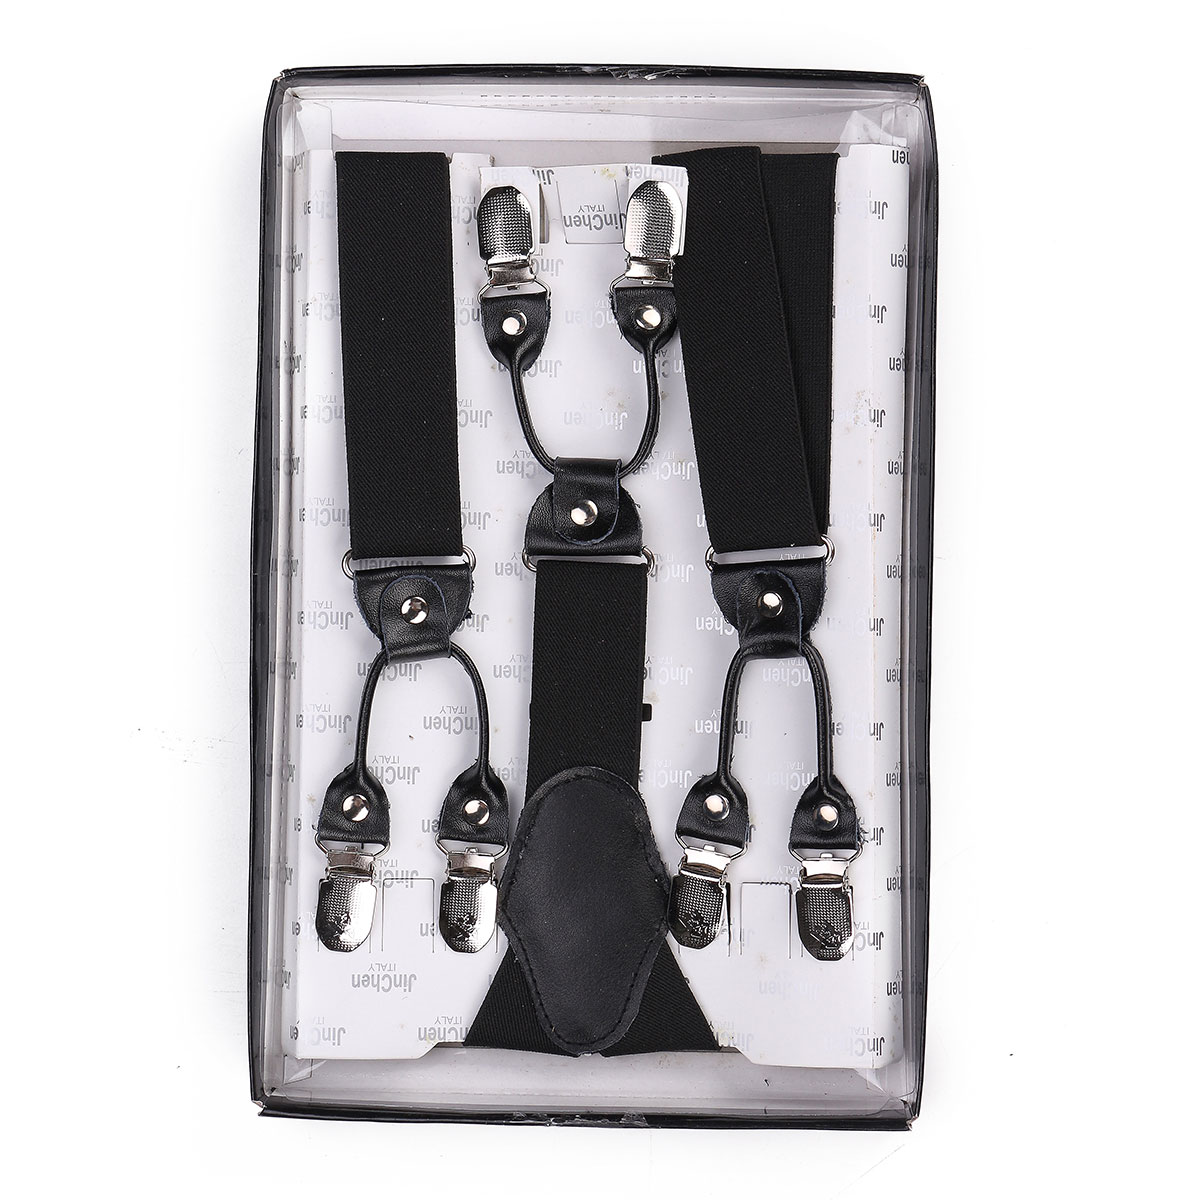 Men-6-Clips-Metal-Y-Back-Suspender-Jacquard-Weaven-Elastic-Adjustable-Pants-Accessories-1055688